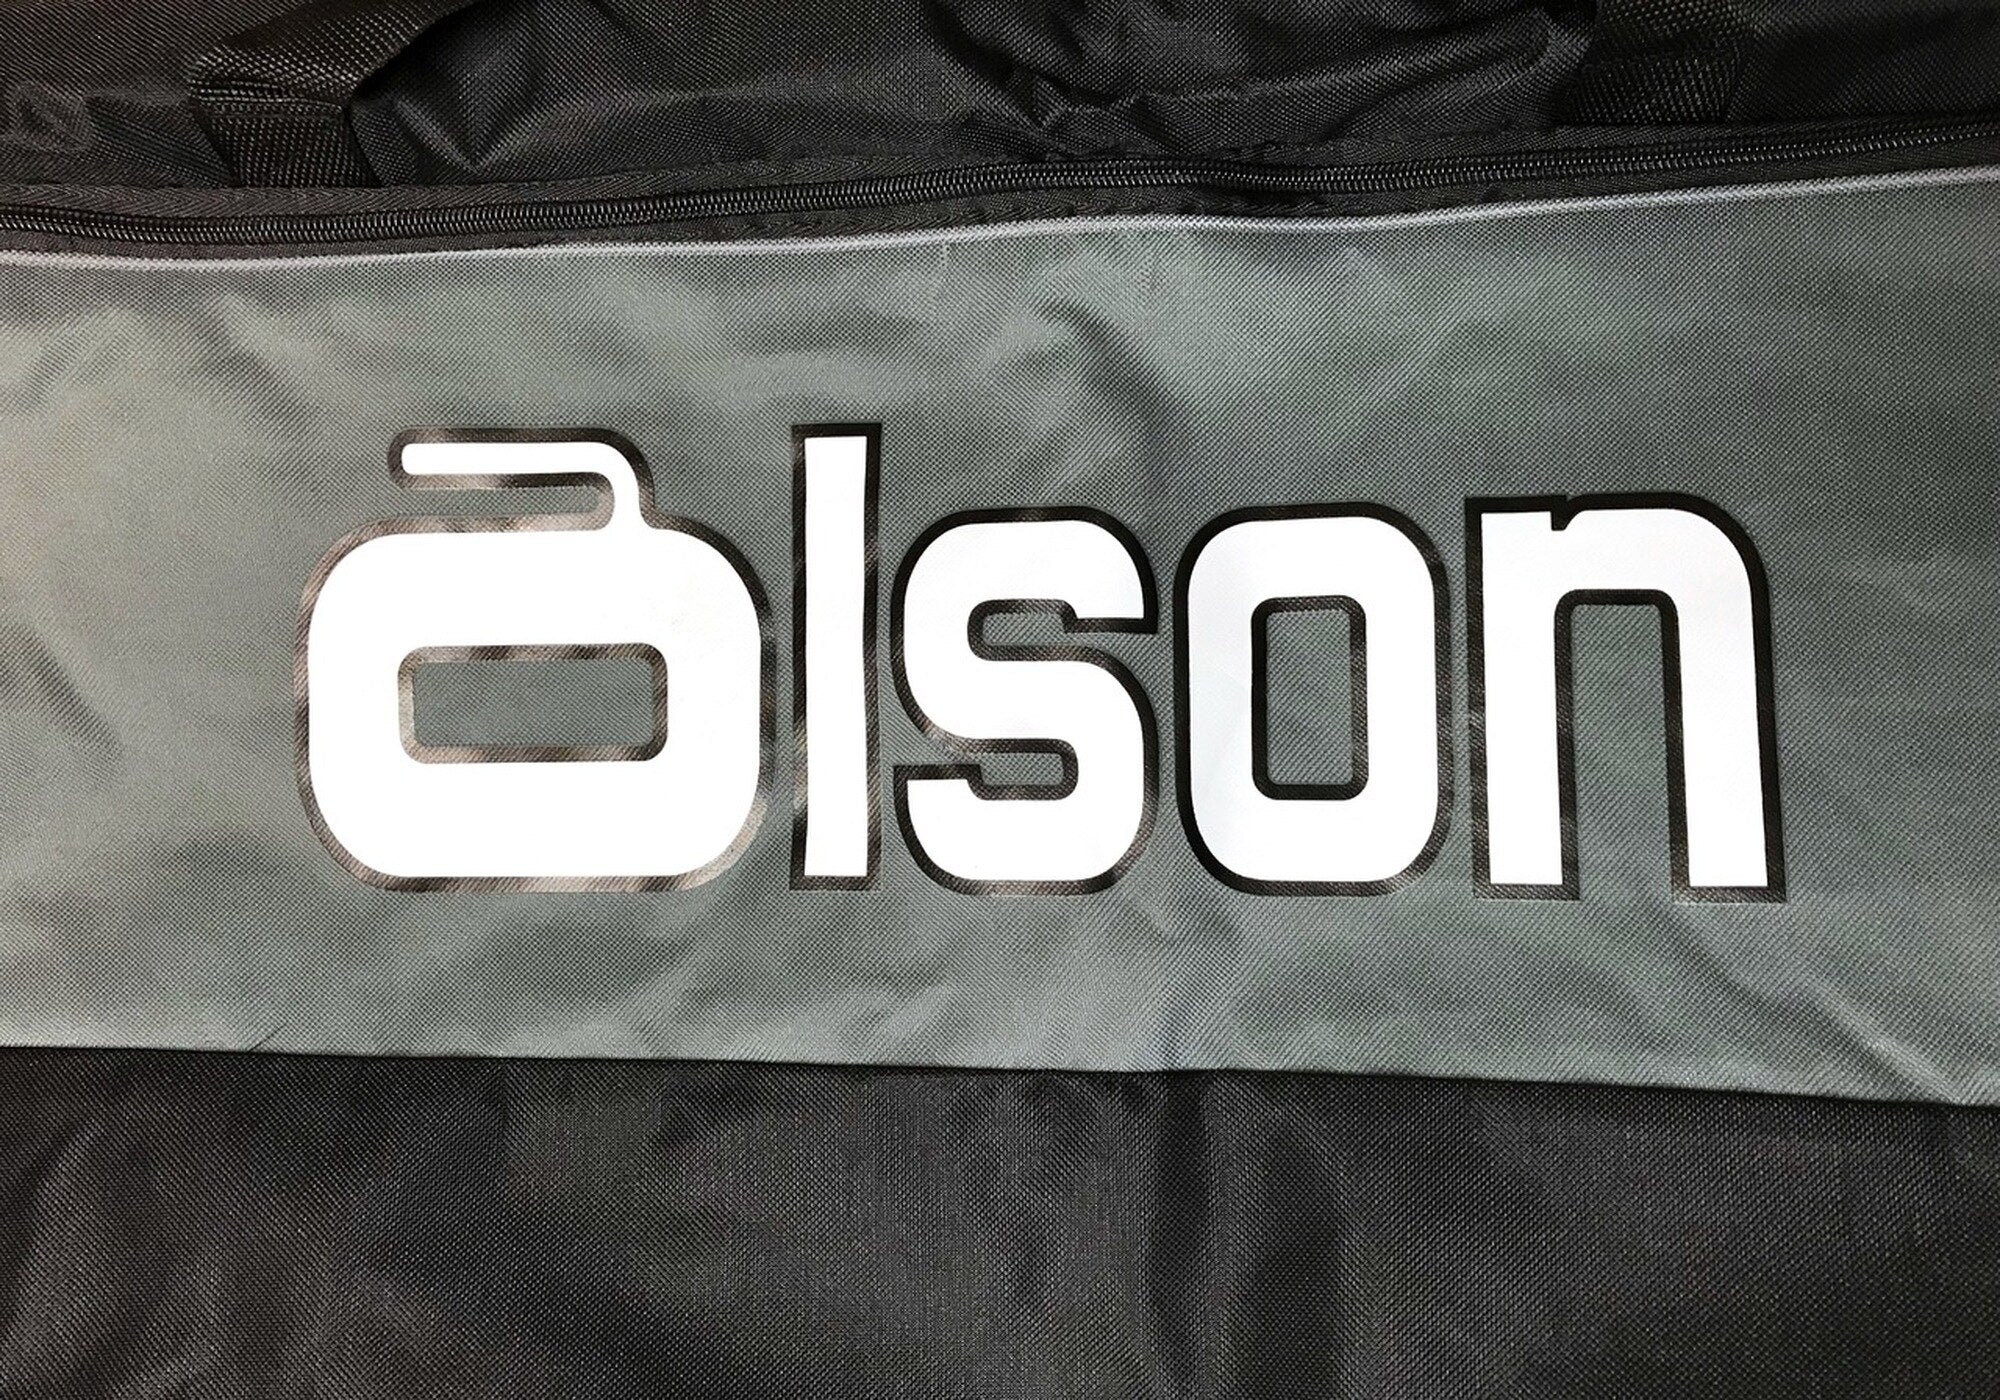 Olson Stick Bag